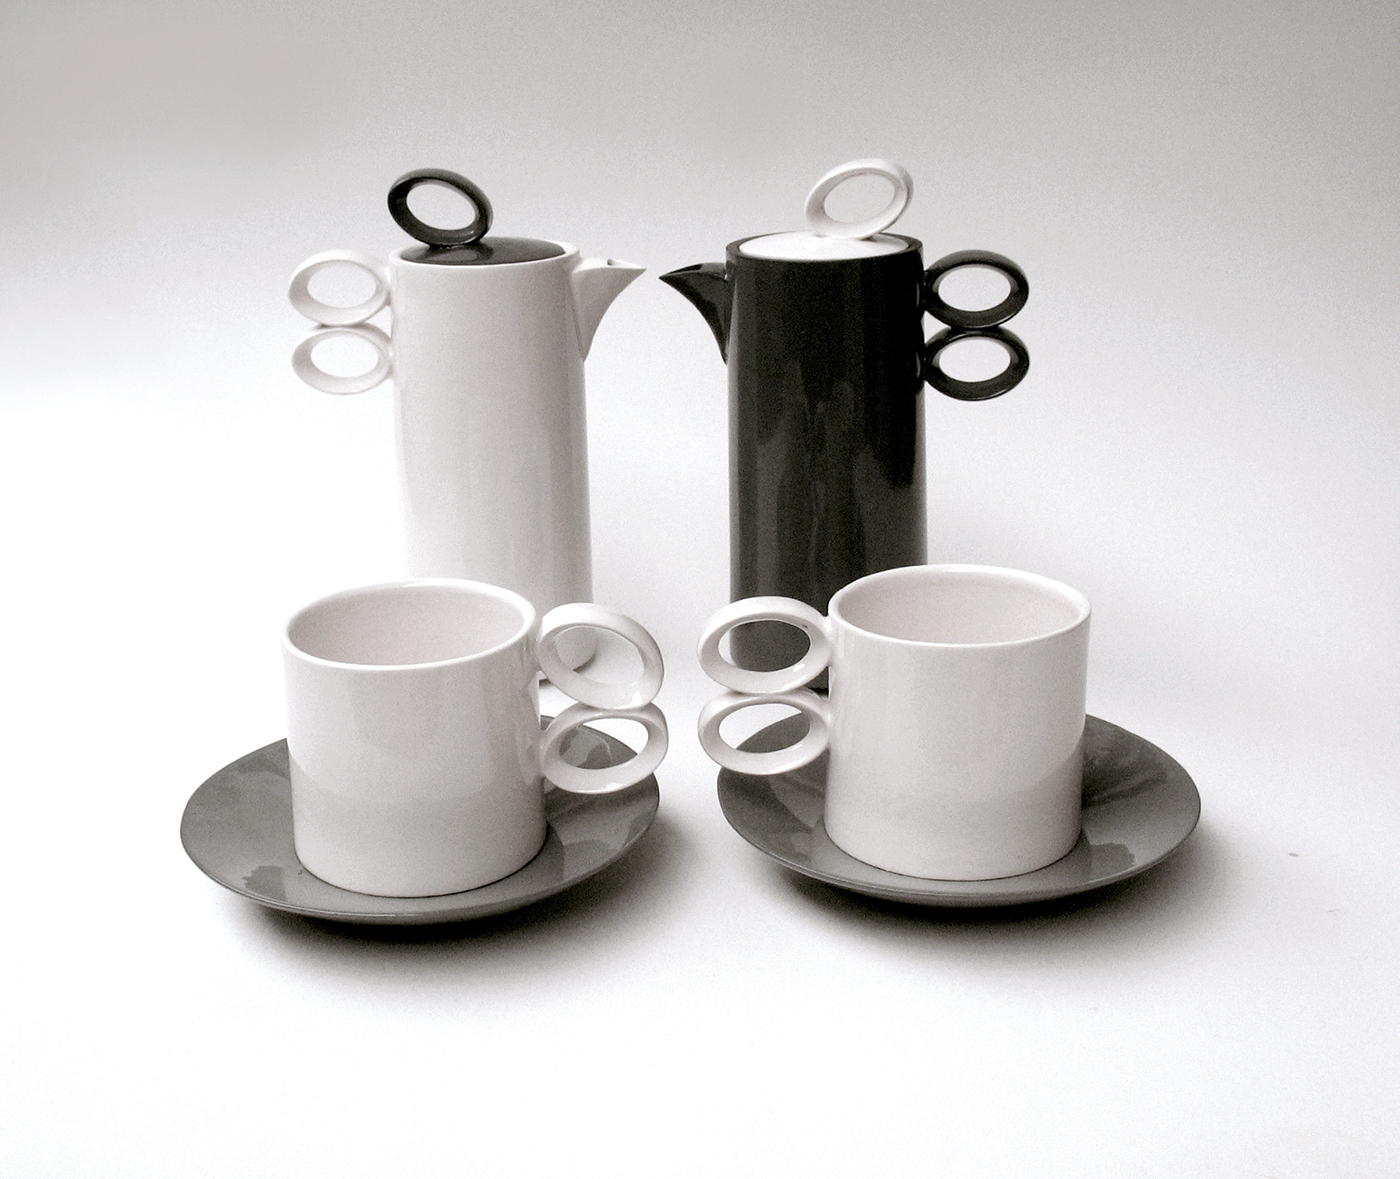 porcelain eliptic coffe for 2 tableware home decor coffe set TEA SET jar